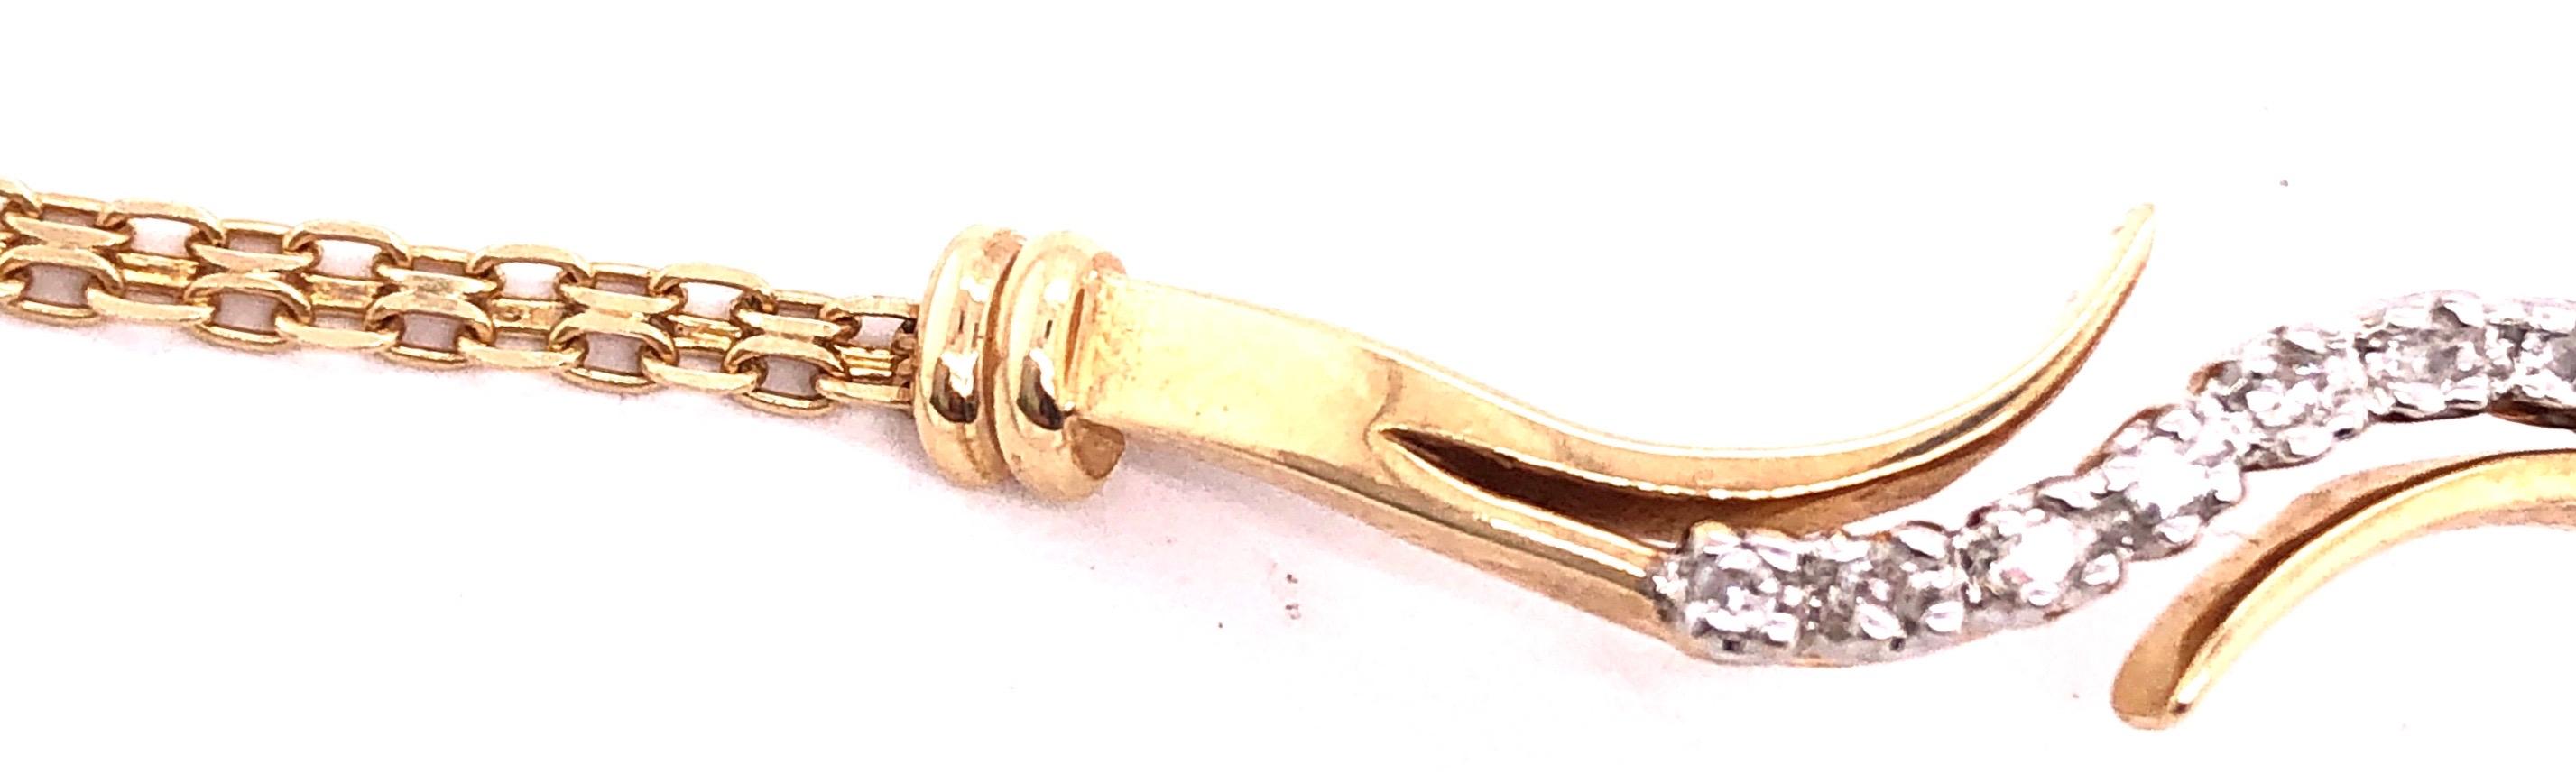 14 Karat Yellow Gold 7 inch Fancy Link Bracelet with Diamonds 0.14 TDW.
4 grams total weight.